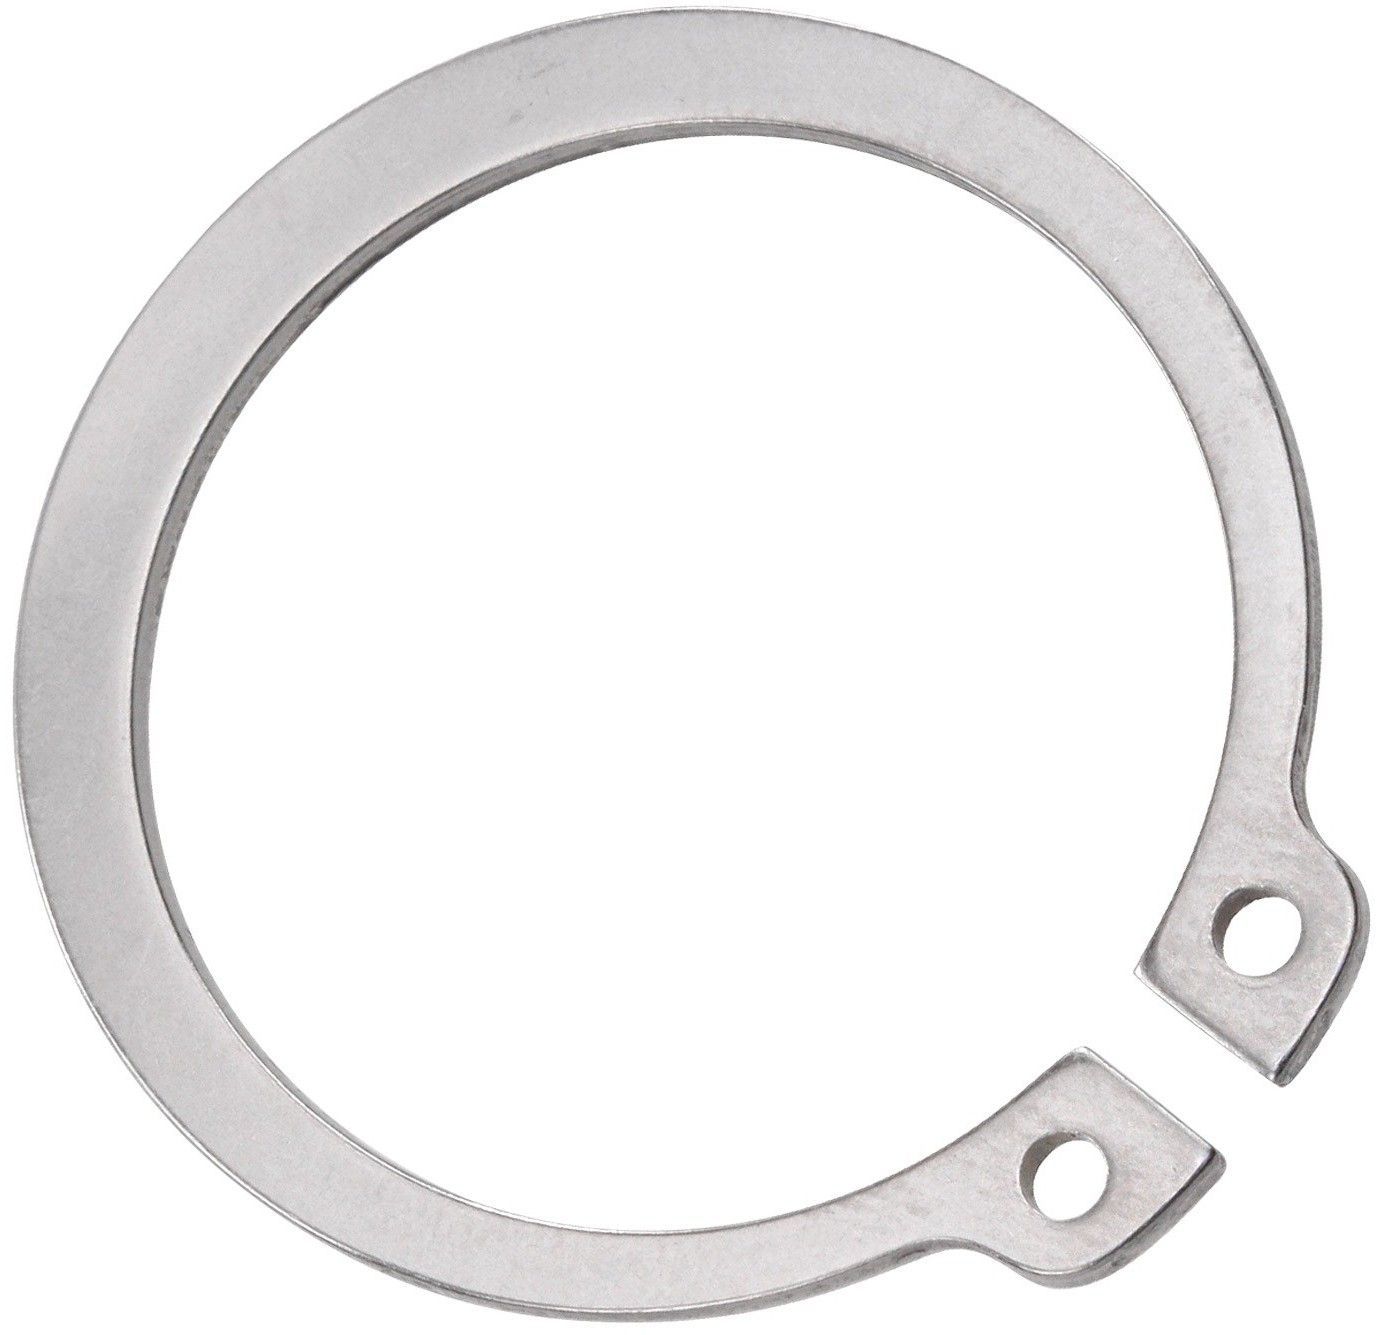 Кольцо стопорное наружное 175х4 DIN 471, нержавеющая сталь 1.4122 (А2) - фото